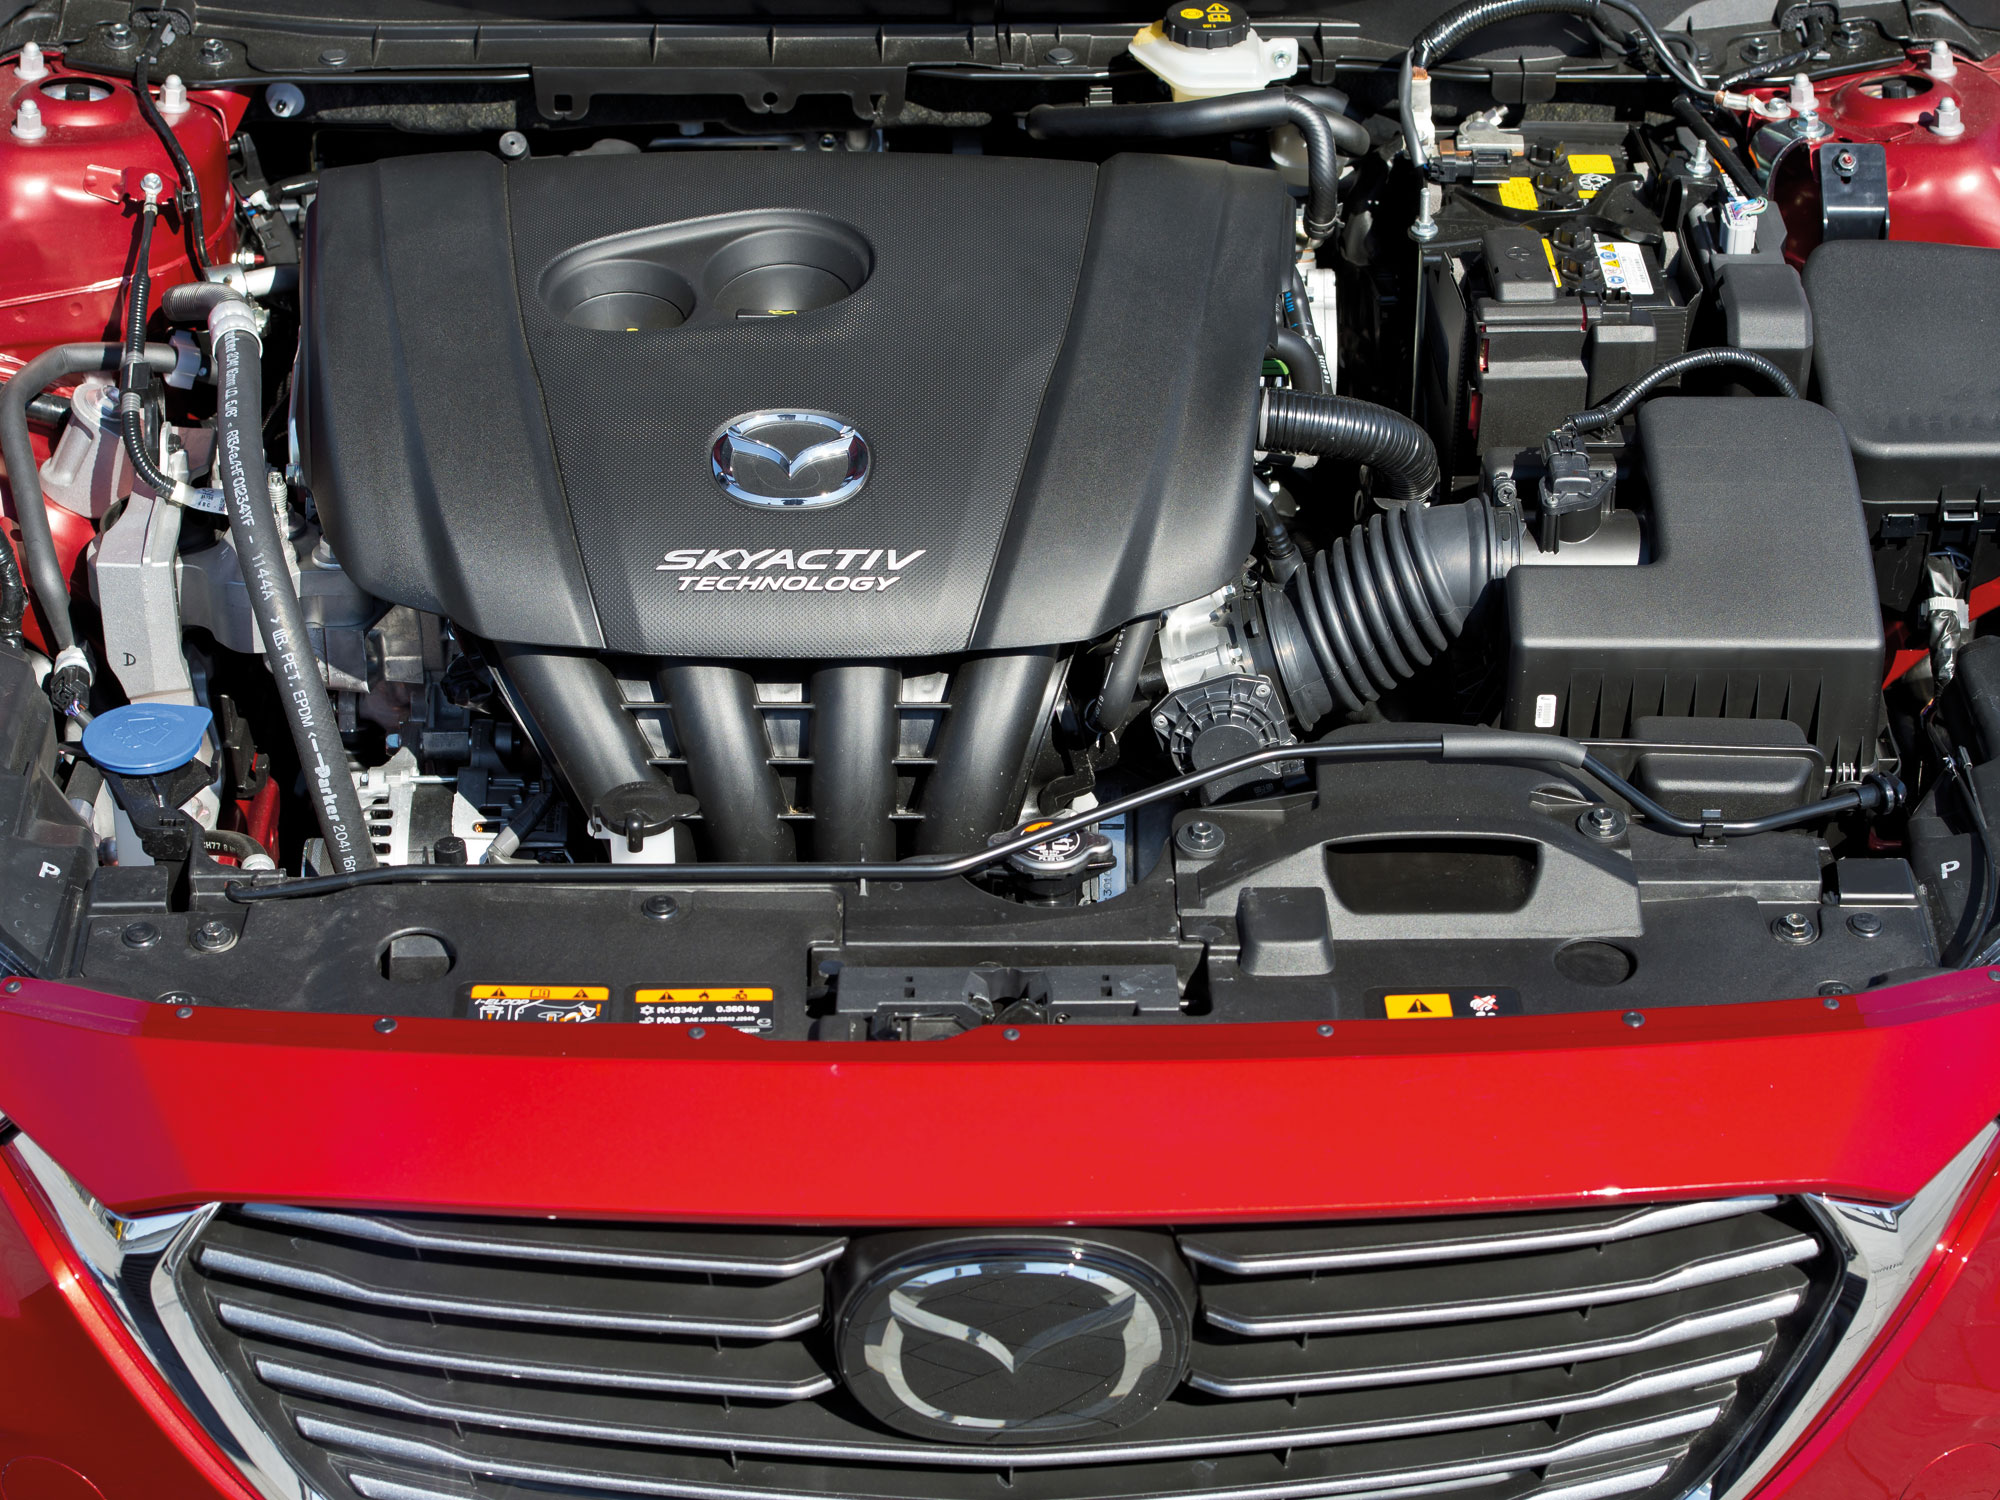 Моторы мазда сх 5. Mazda CX 5 двигатель. Мазда СХ-5 под капотом. Mazda CX 5 под капотом. Мазда CX 5 2.0 двигатель.